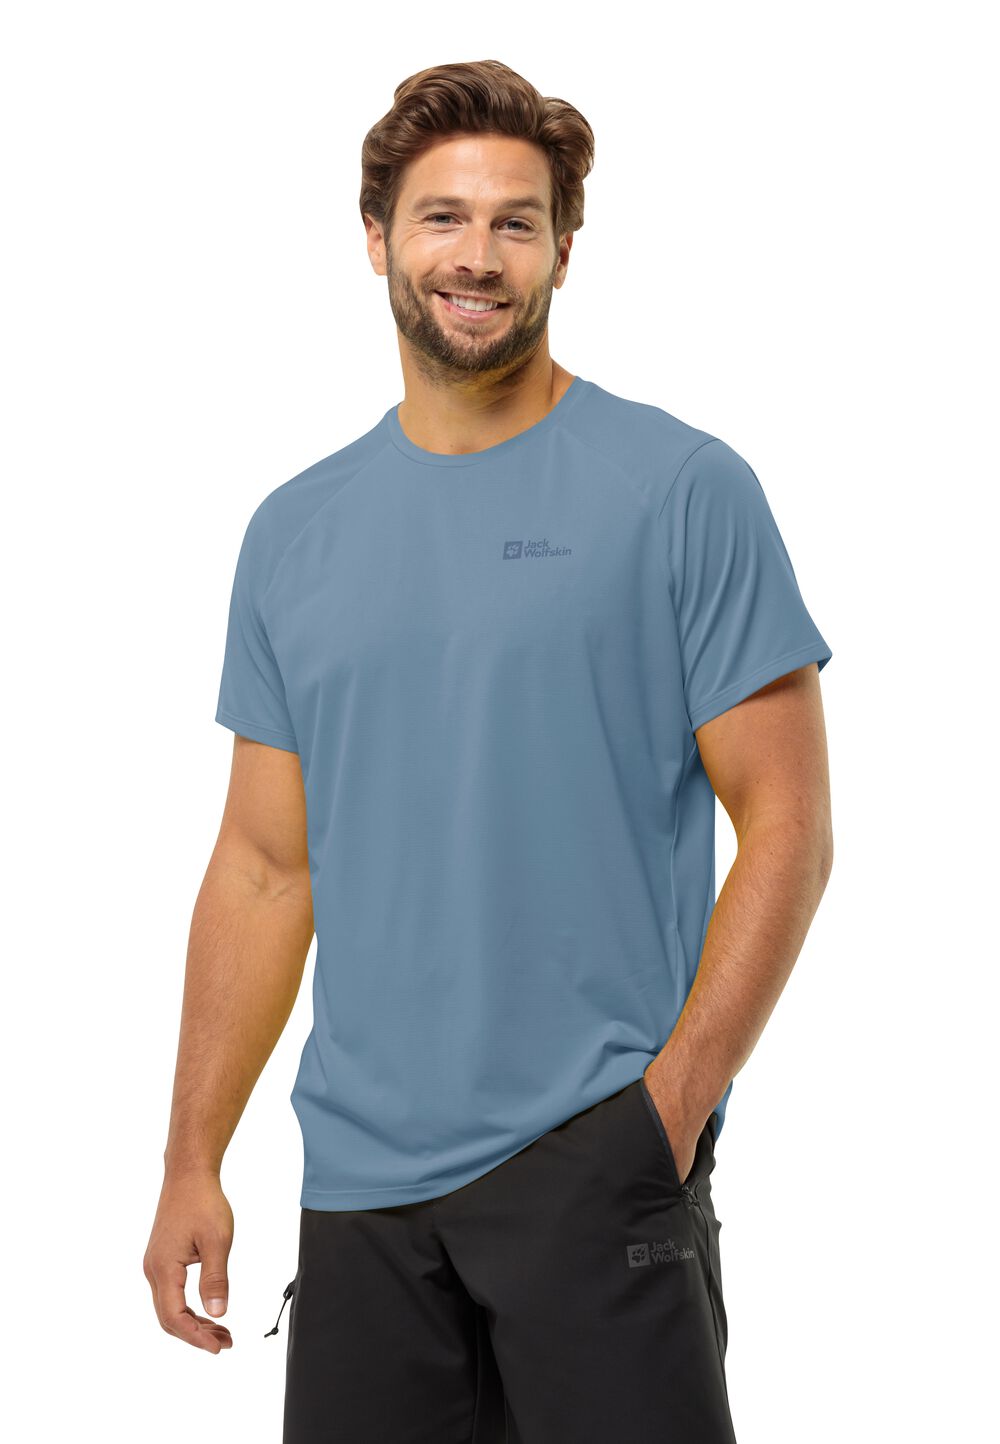 Jack Wolfskin Prelight Trail T-Shirt Men Functioneel shirt Heren L elemental blue elemental blue